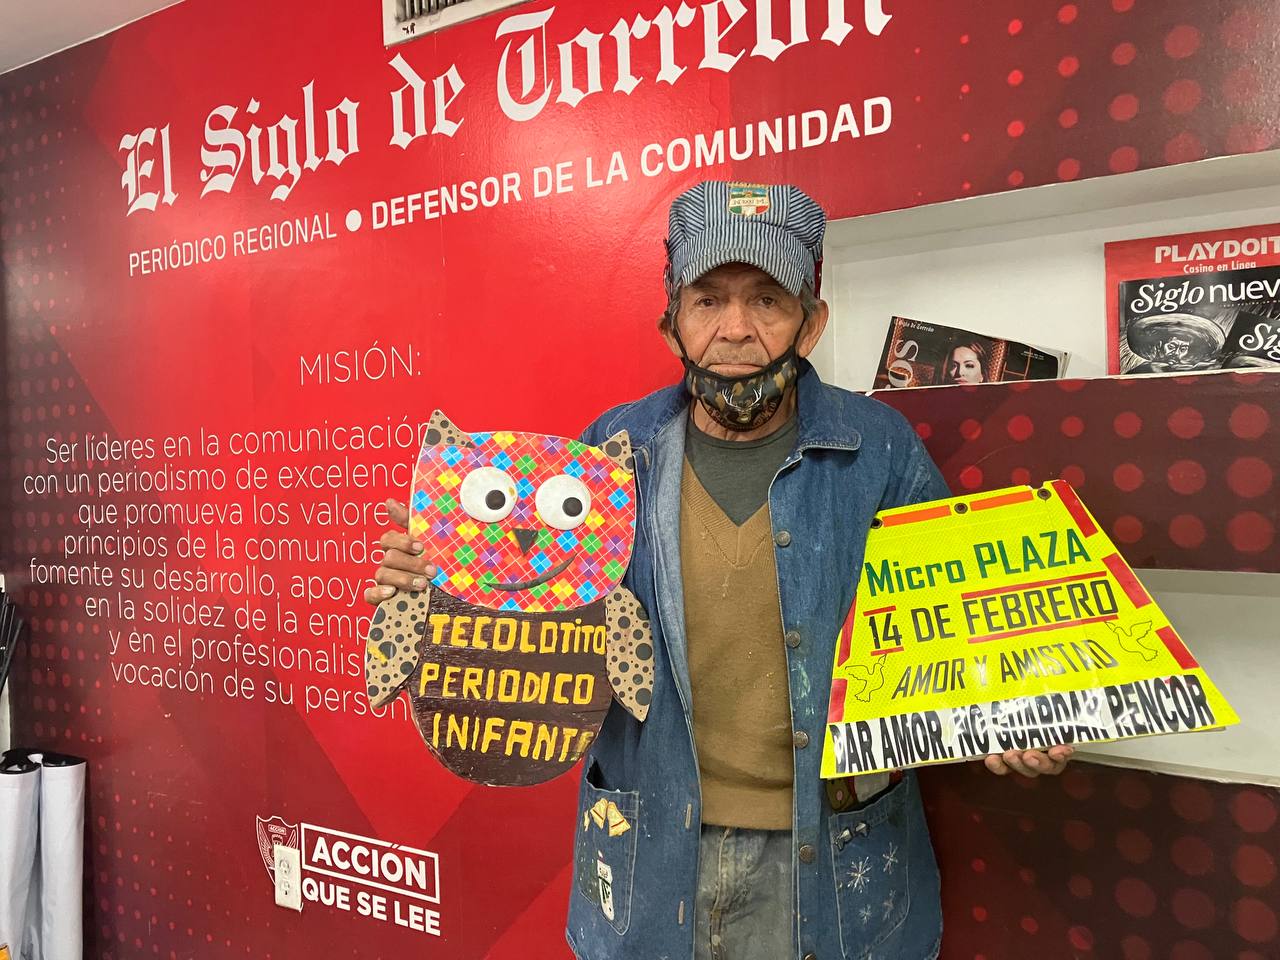 Invitan a microplaza 14 de febrero de Torreón para la imposición de ceniza 